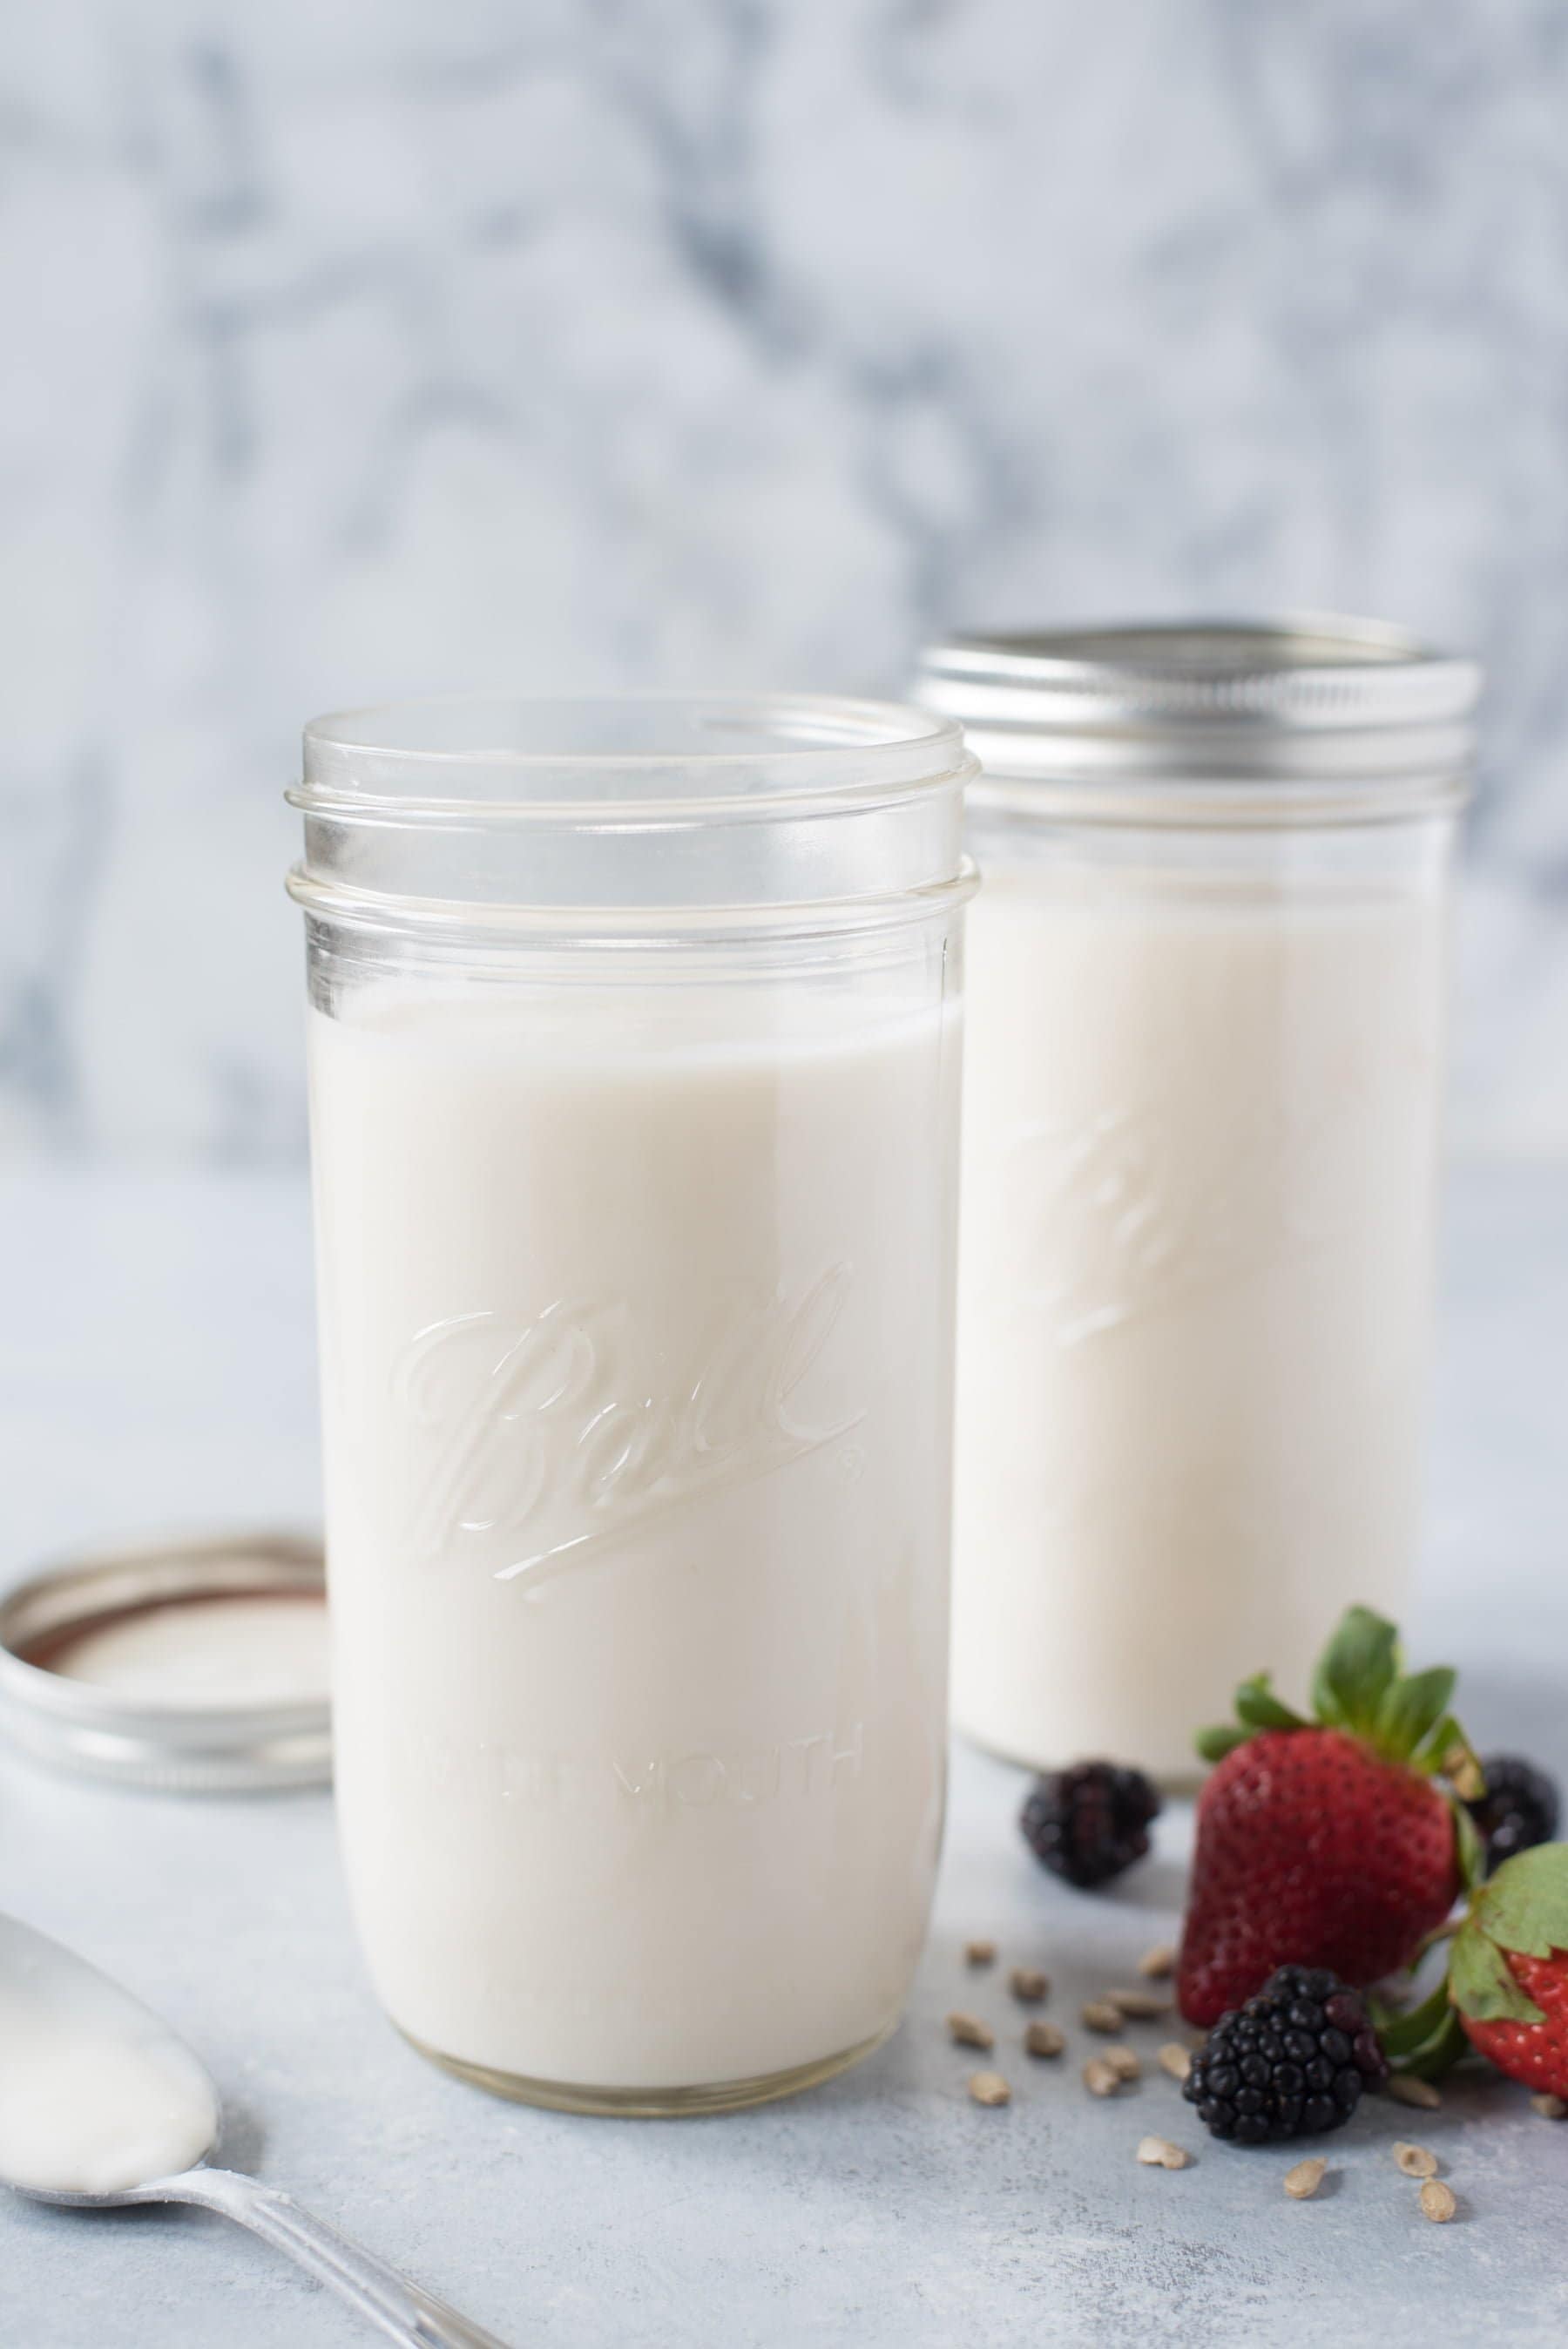 https://wholefully.com/wp-content/uploads/2018/03/coconut-milk-yogurt-in-jars.jpg